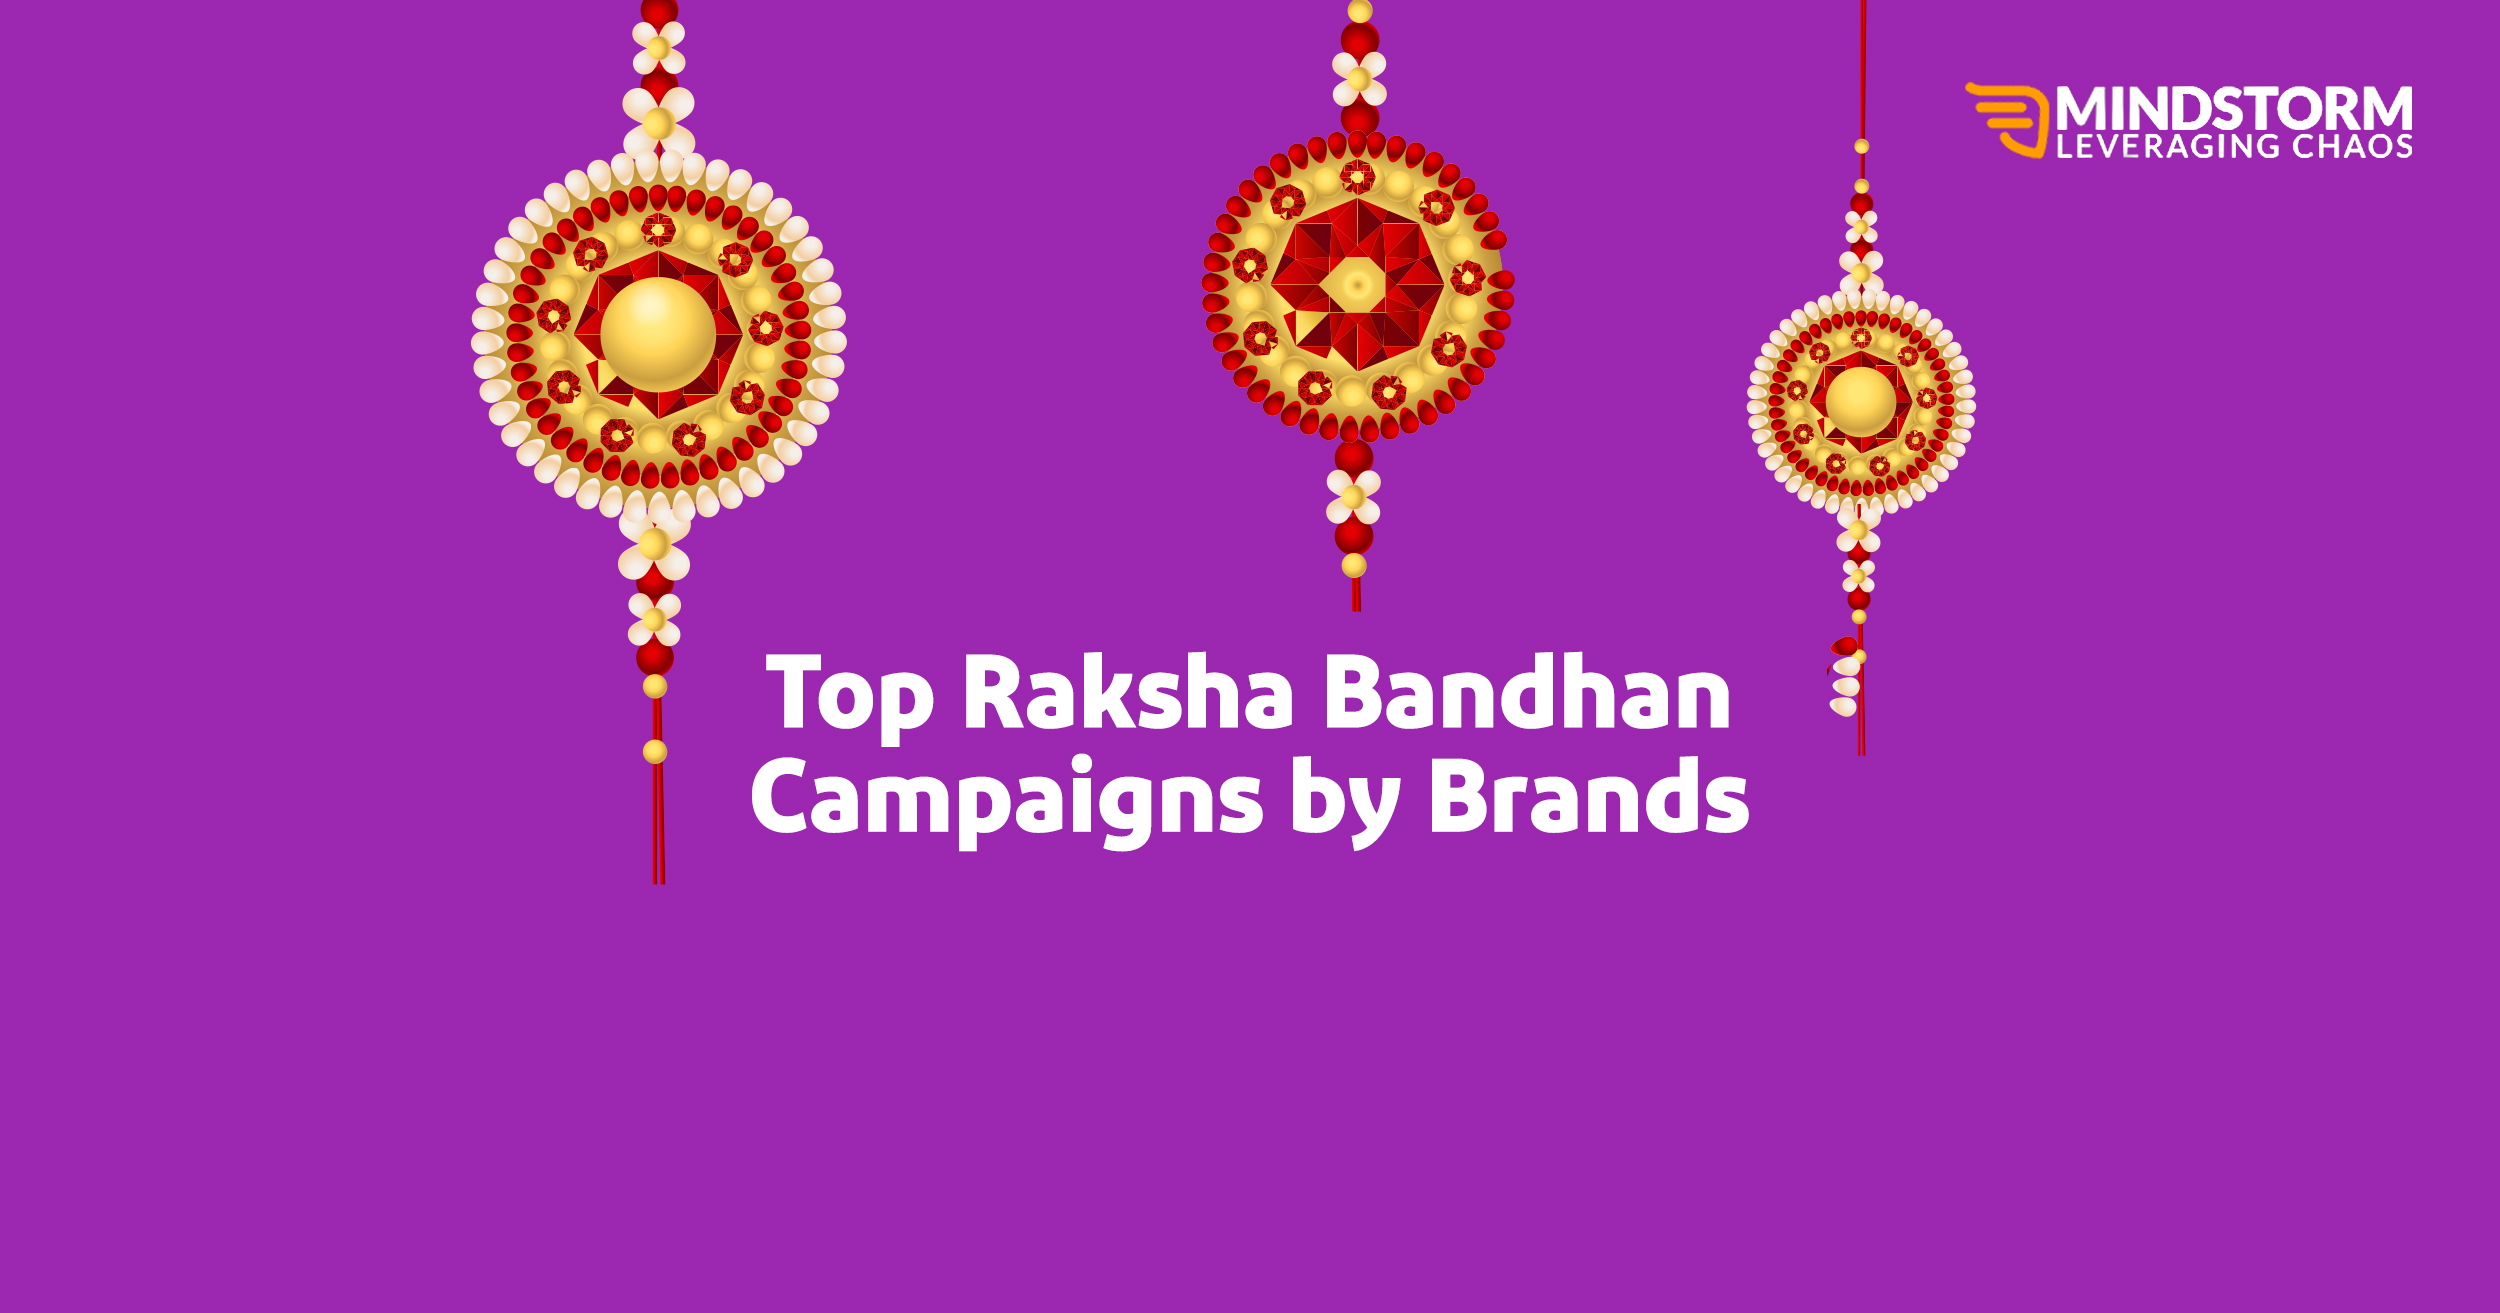 Top Raksha Bandhan Campaigns by Brands